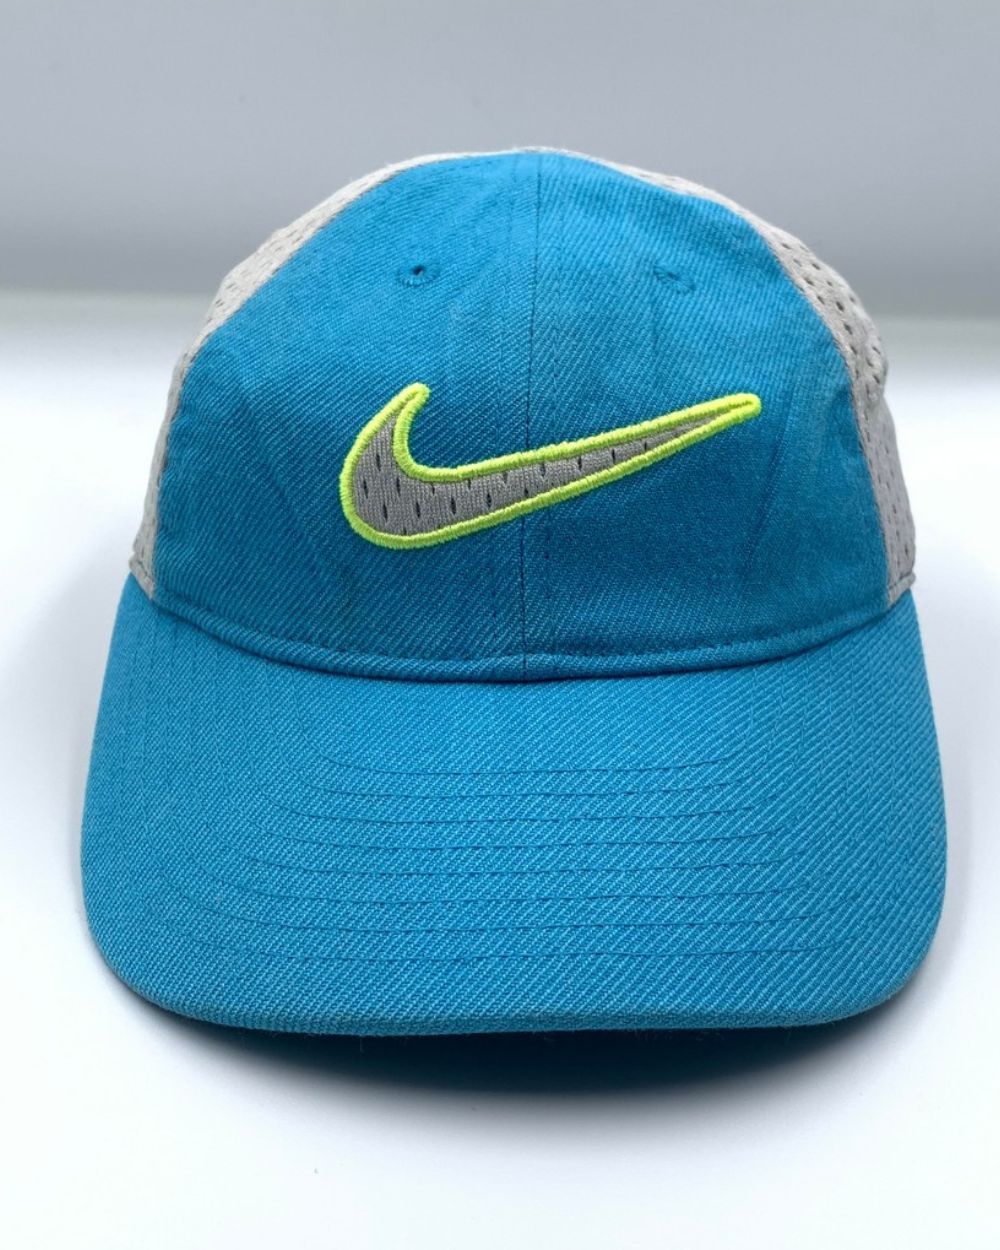 Nike Branded Original Branded Caps For Men